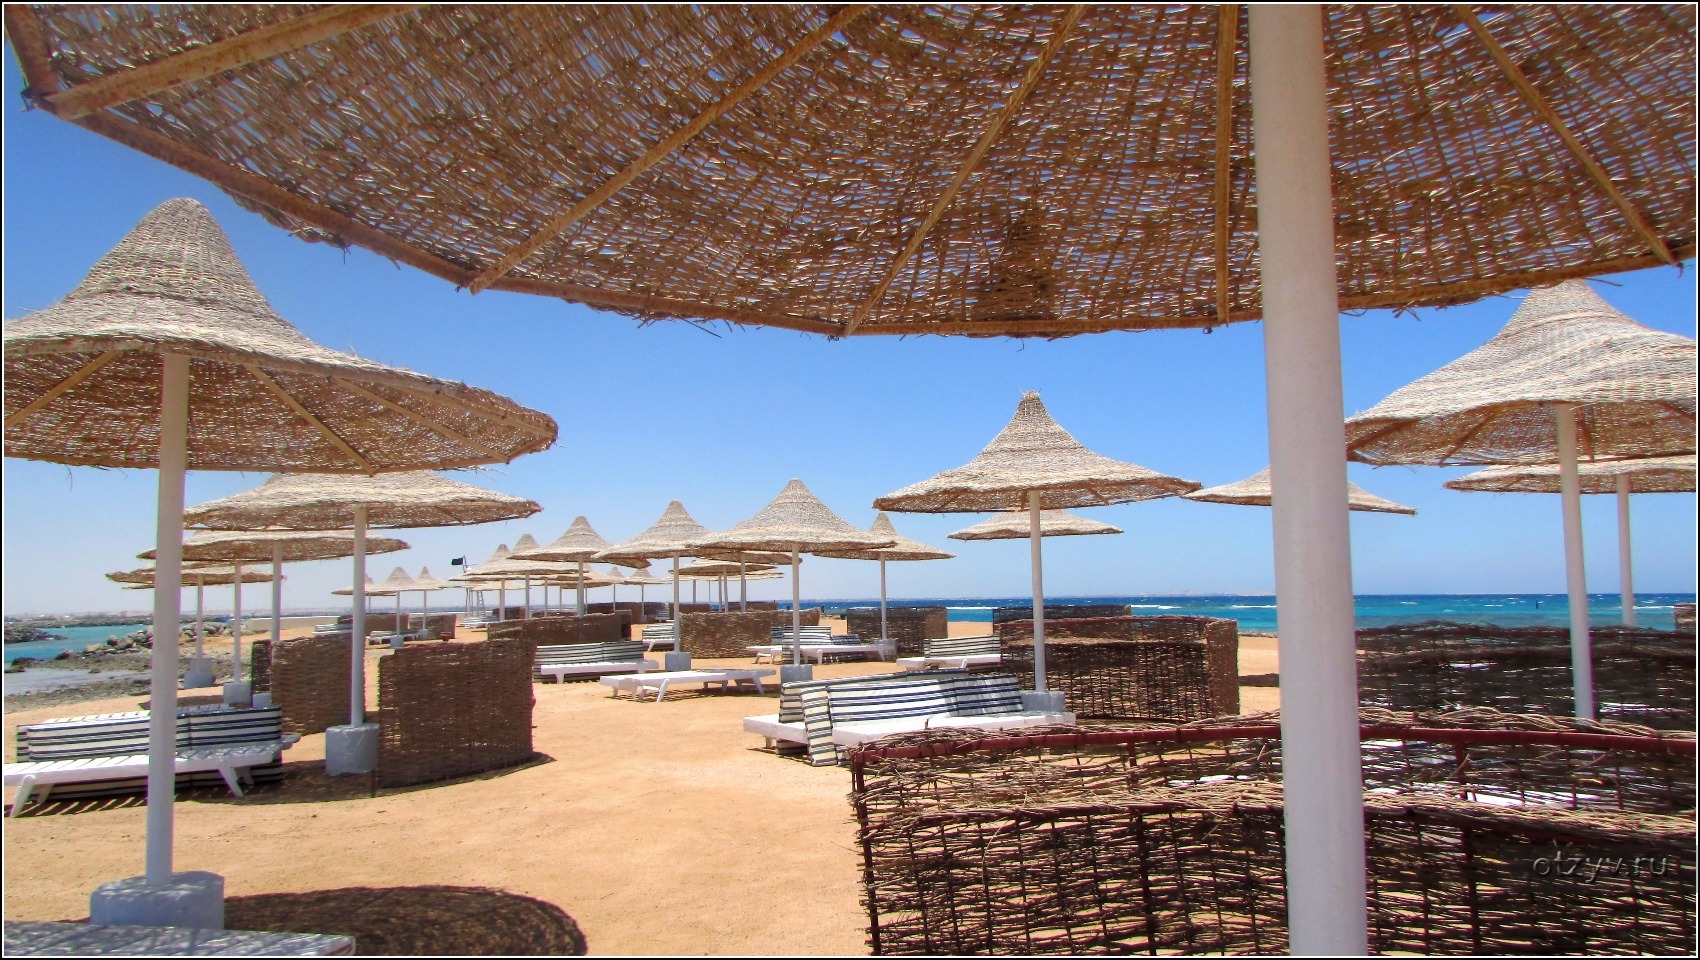 Coral beach 4 хургада. Корал Бич Хургада 4. Coral Beach Hotel Hurghada Египет Хургада. Клеопатра Корал Бич Хургада. Пляж Мохито Хургада.